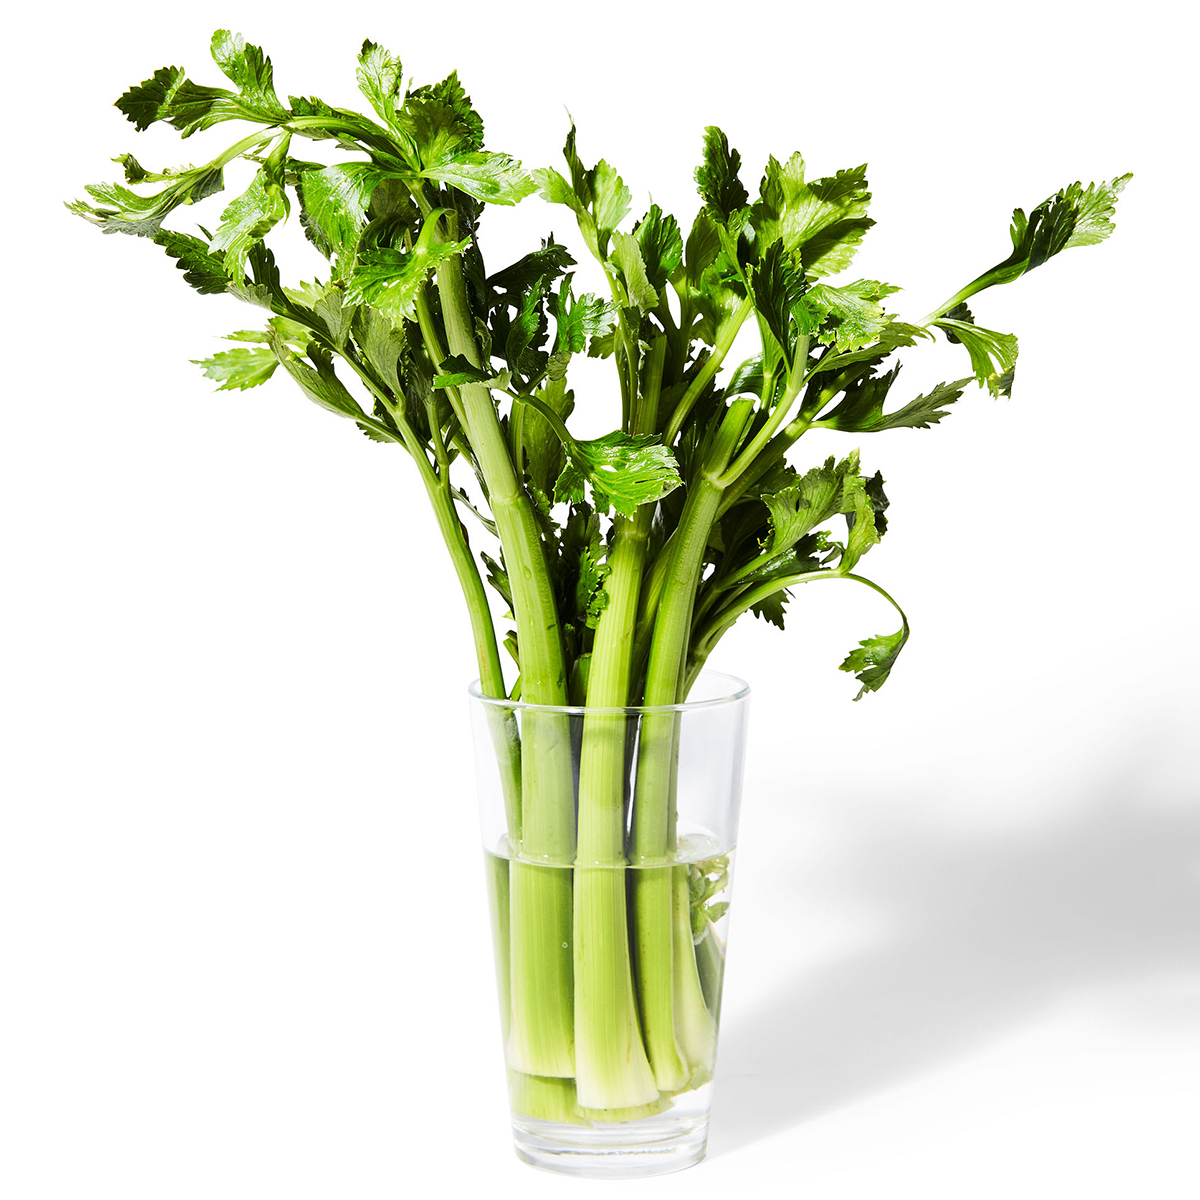 celery stalks in water glass